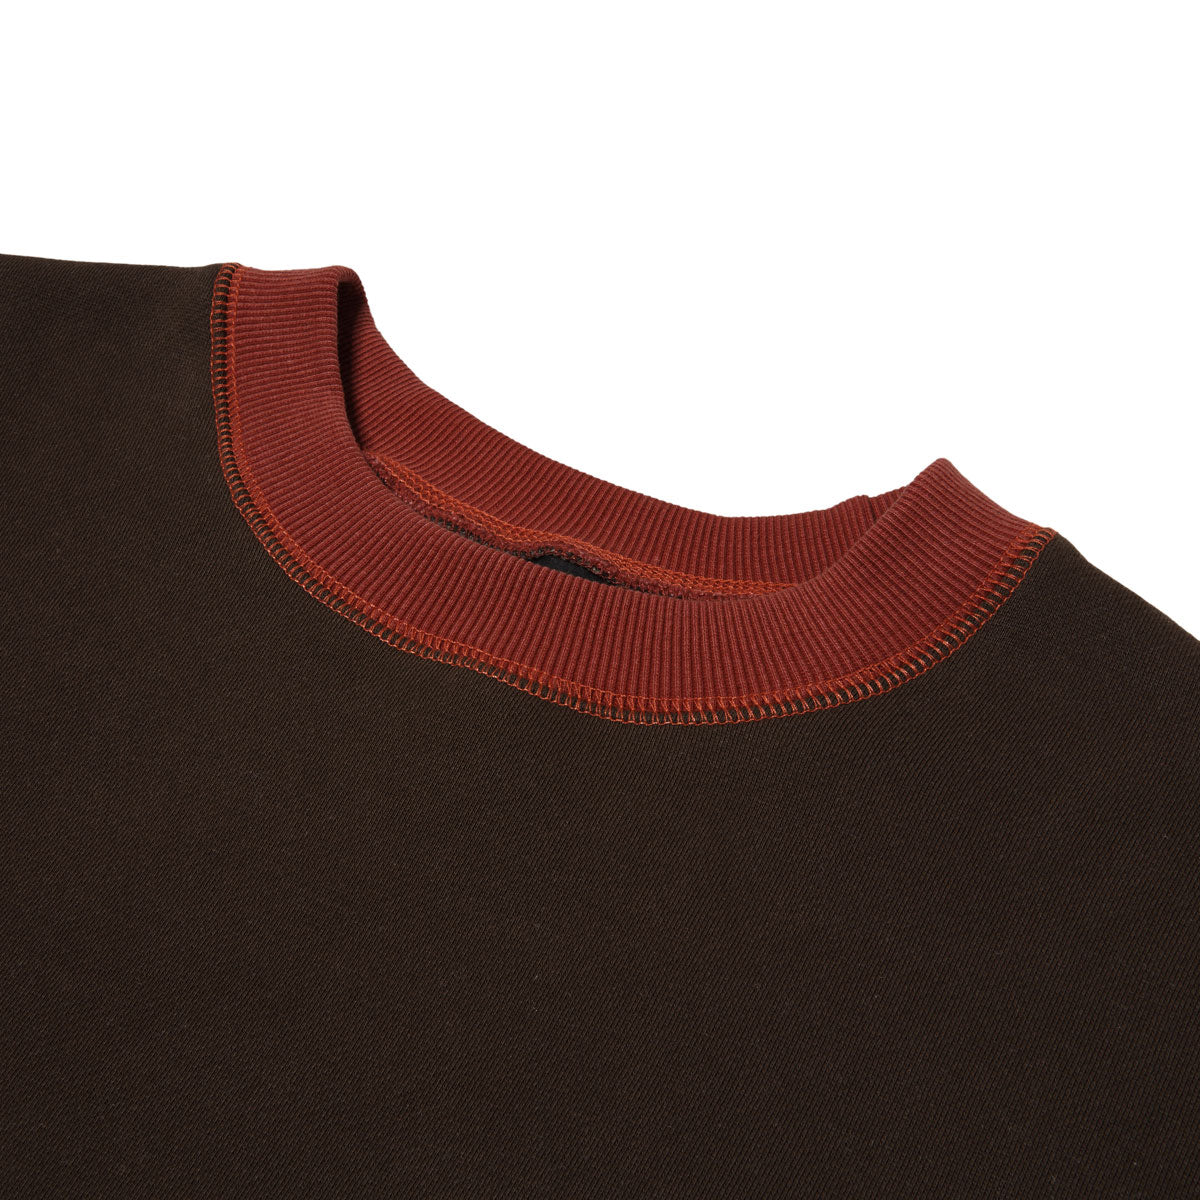 WKND Pigment Jumper Sweatshirt - Brown image 4